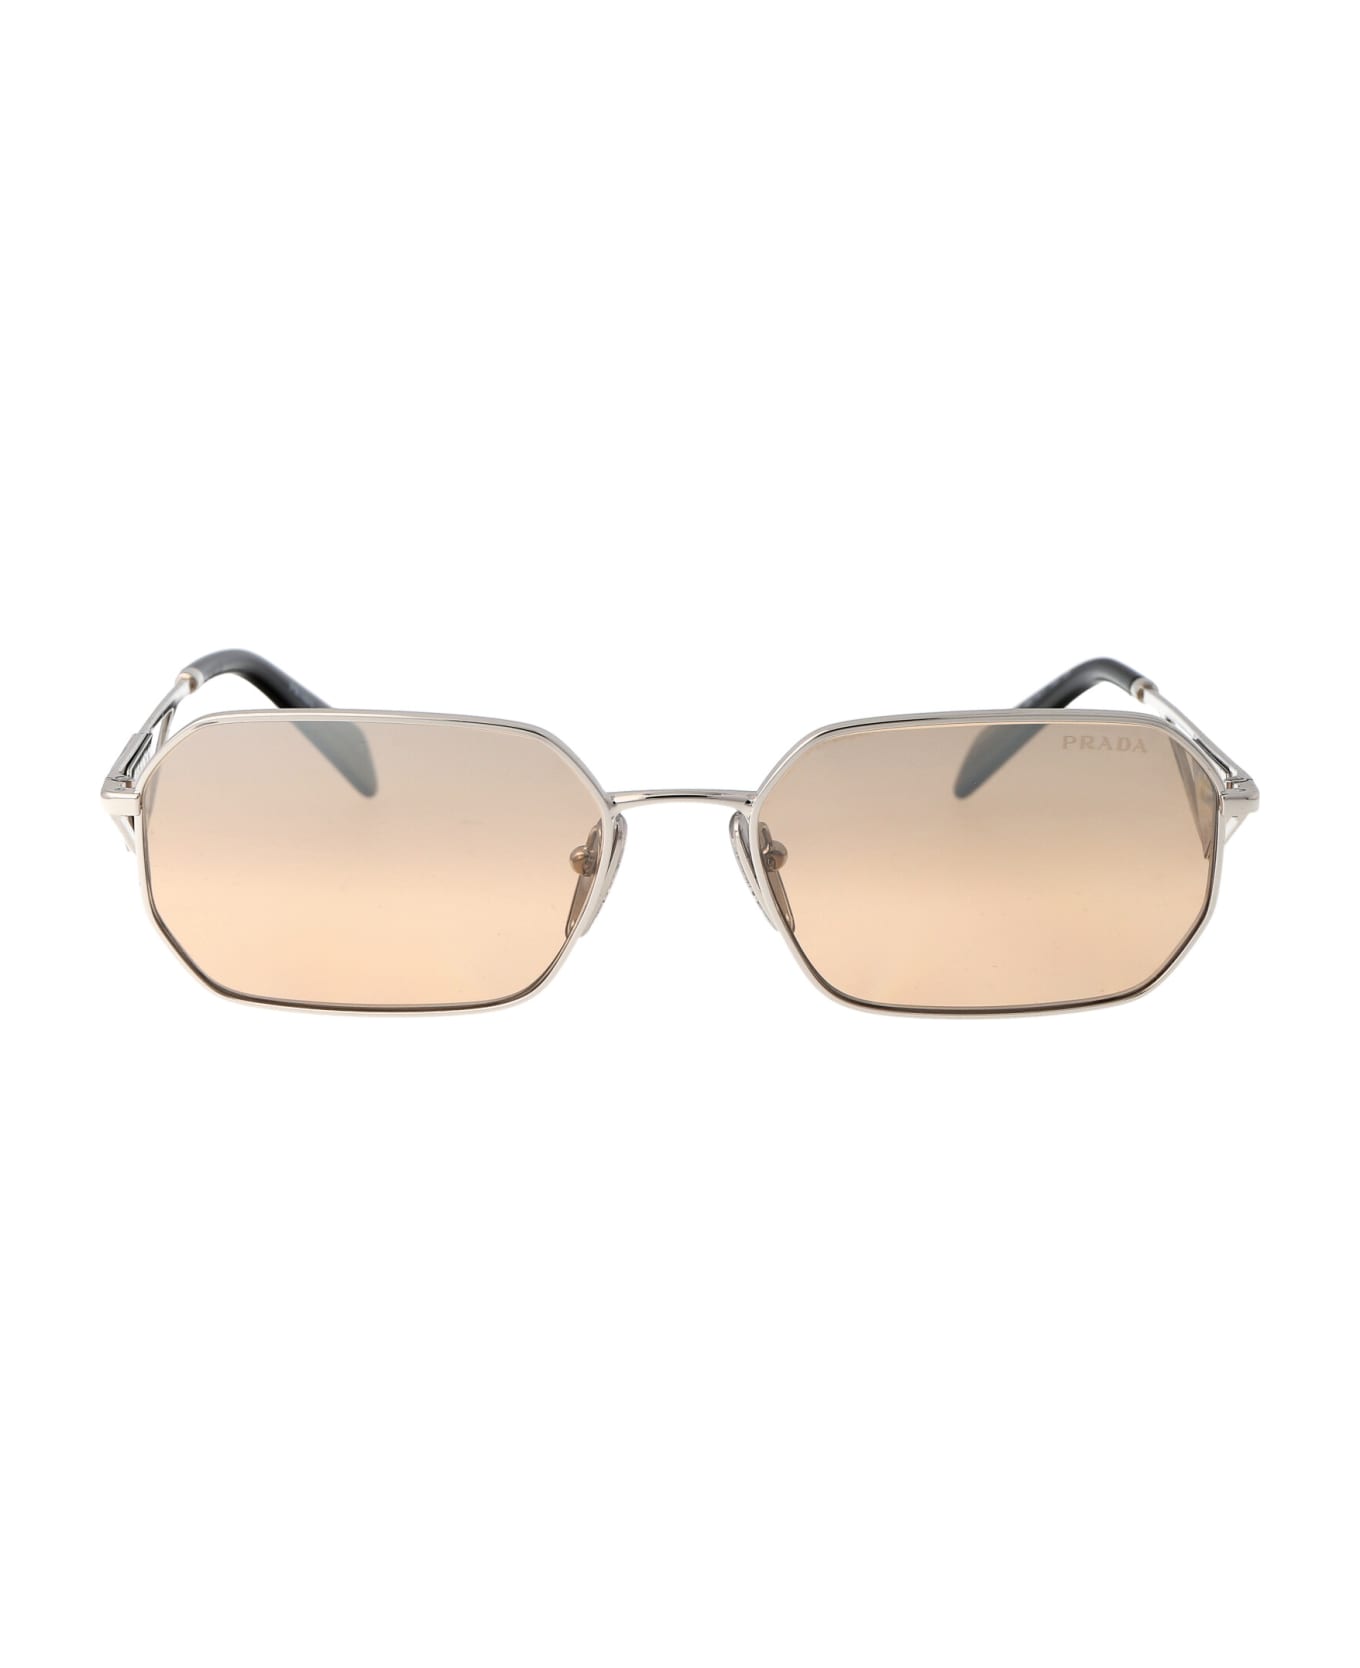 Prada Eyewear 0pr A51s Sunglasses - 1BC8J1 Pale Gold